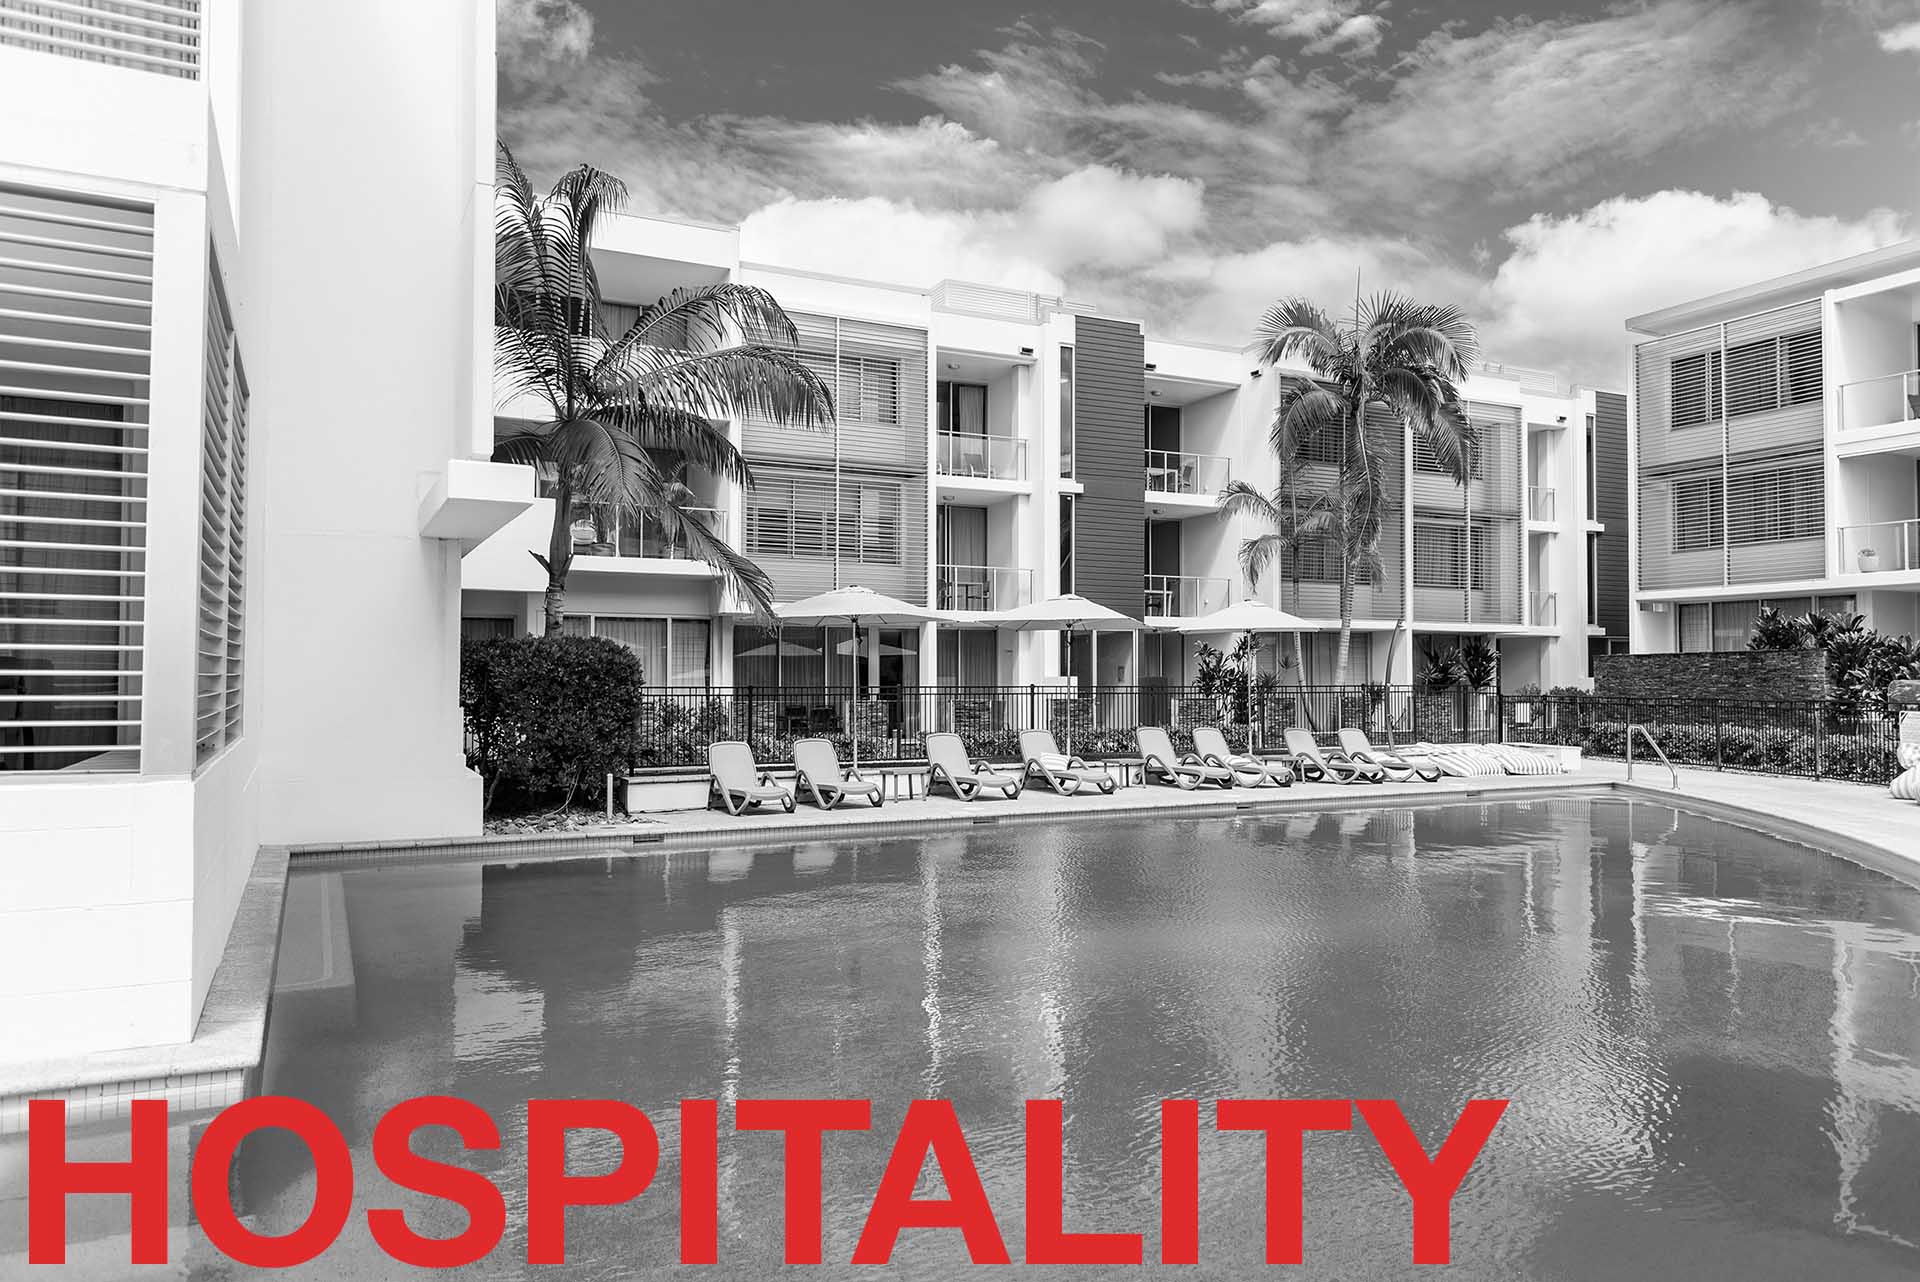 Hotels & hospitality